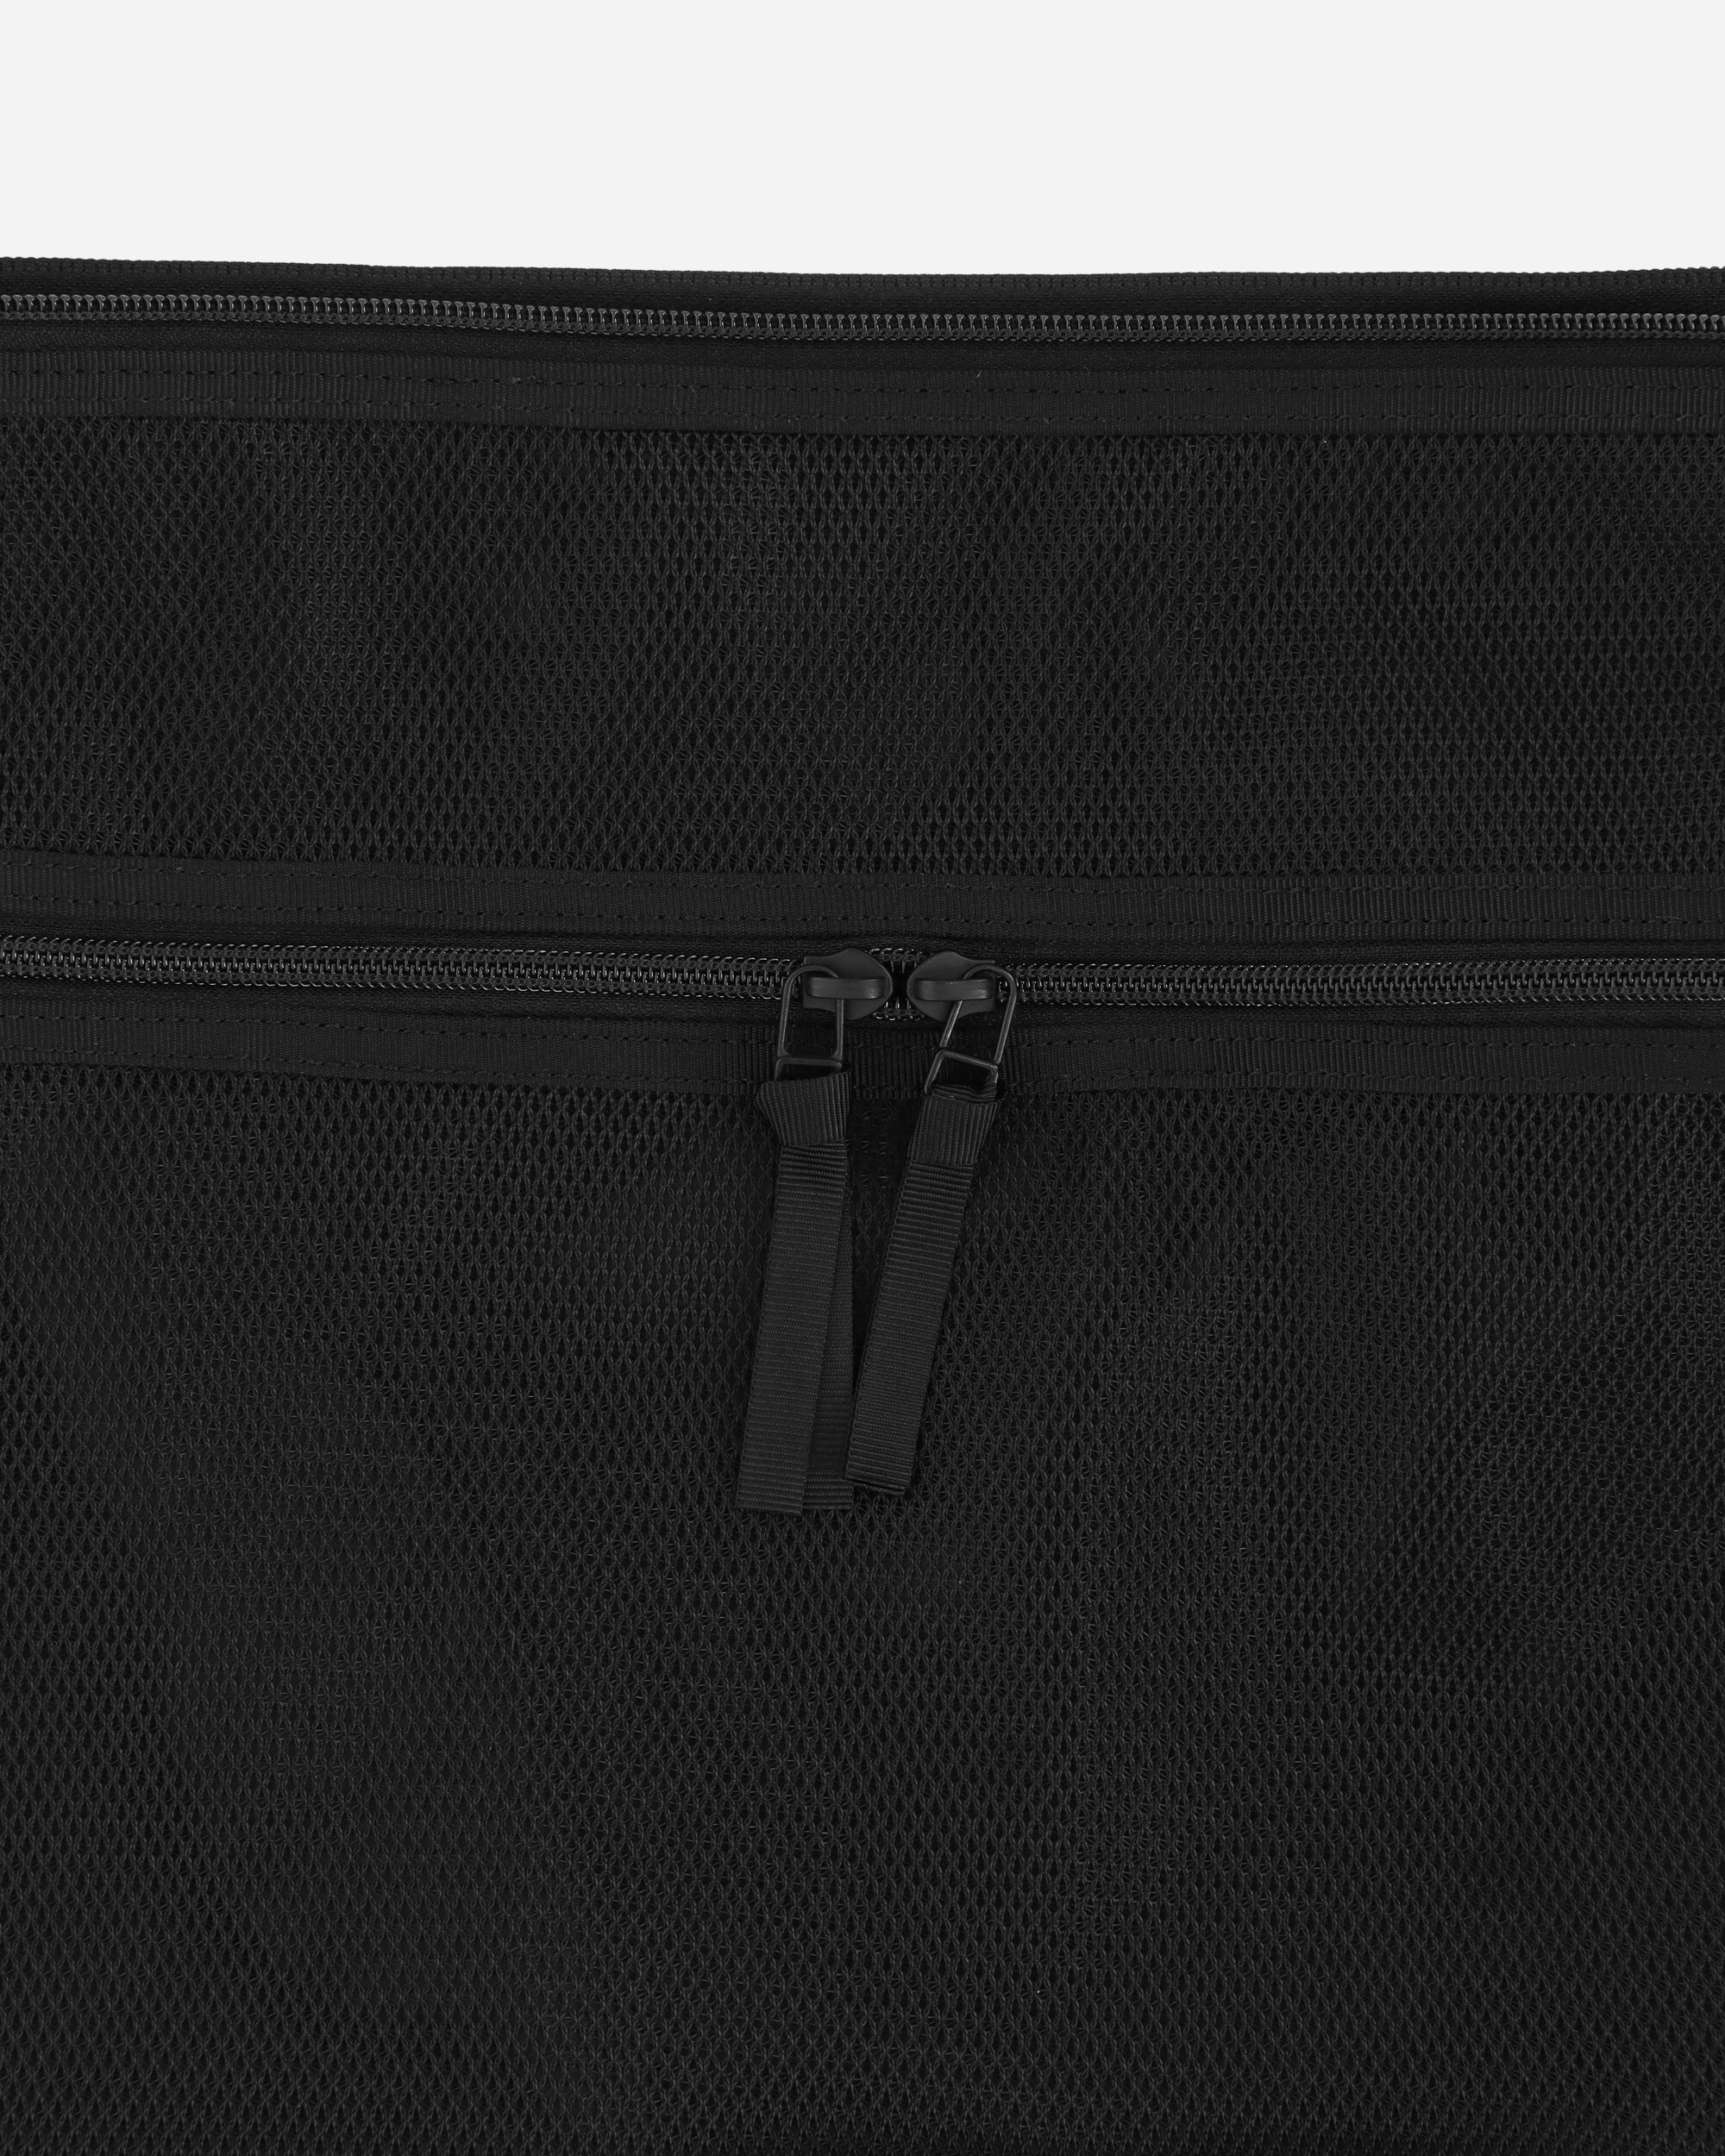 WACKO MARIA Speak Easy / Reversible Shoulder Bag Black Bags and Backpacks Shoulder Bags 23SS-WMA-BG08 1